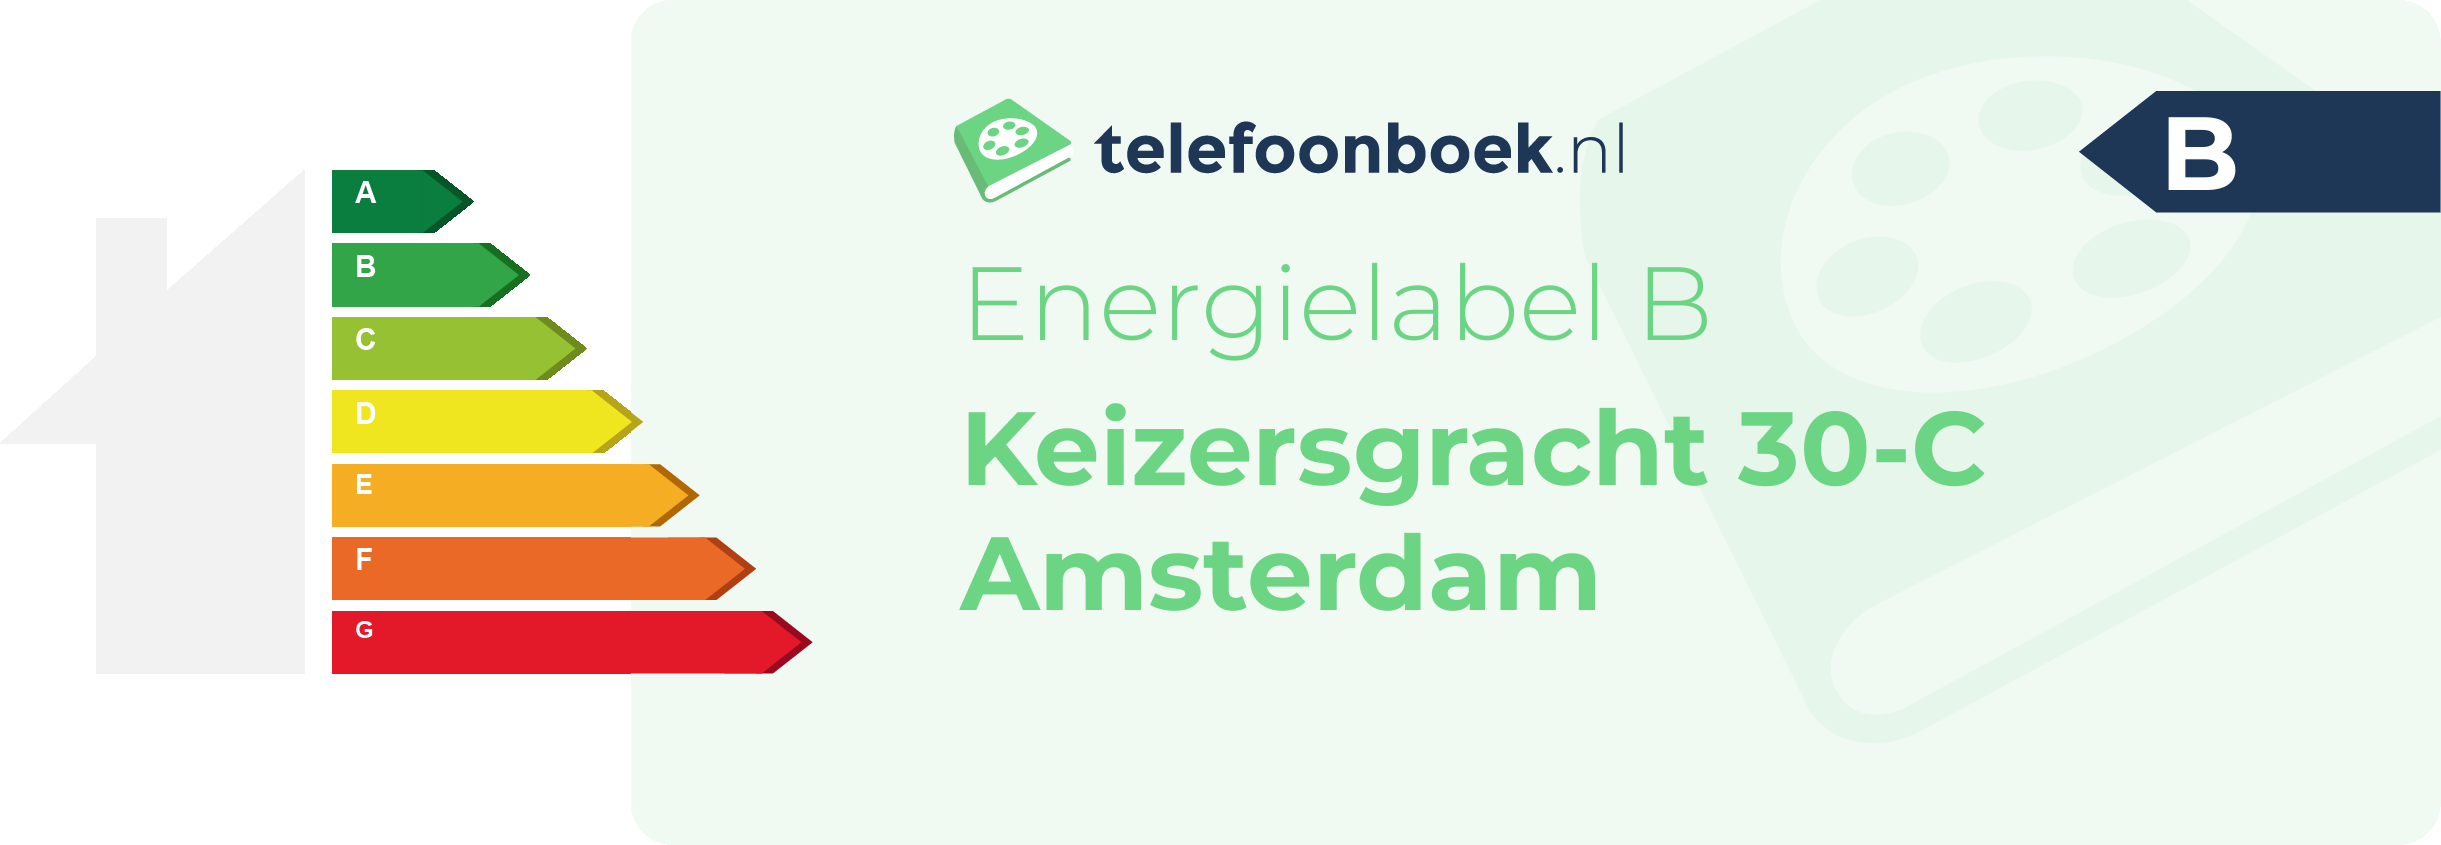 Energielabel Keizersgracht 30-C Amsterdam